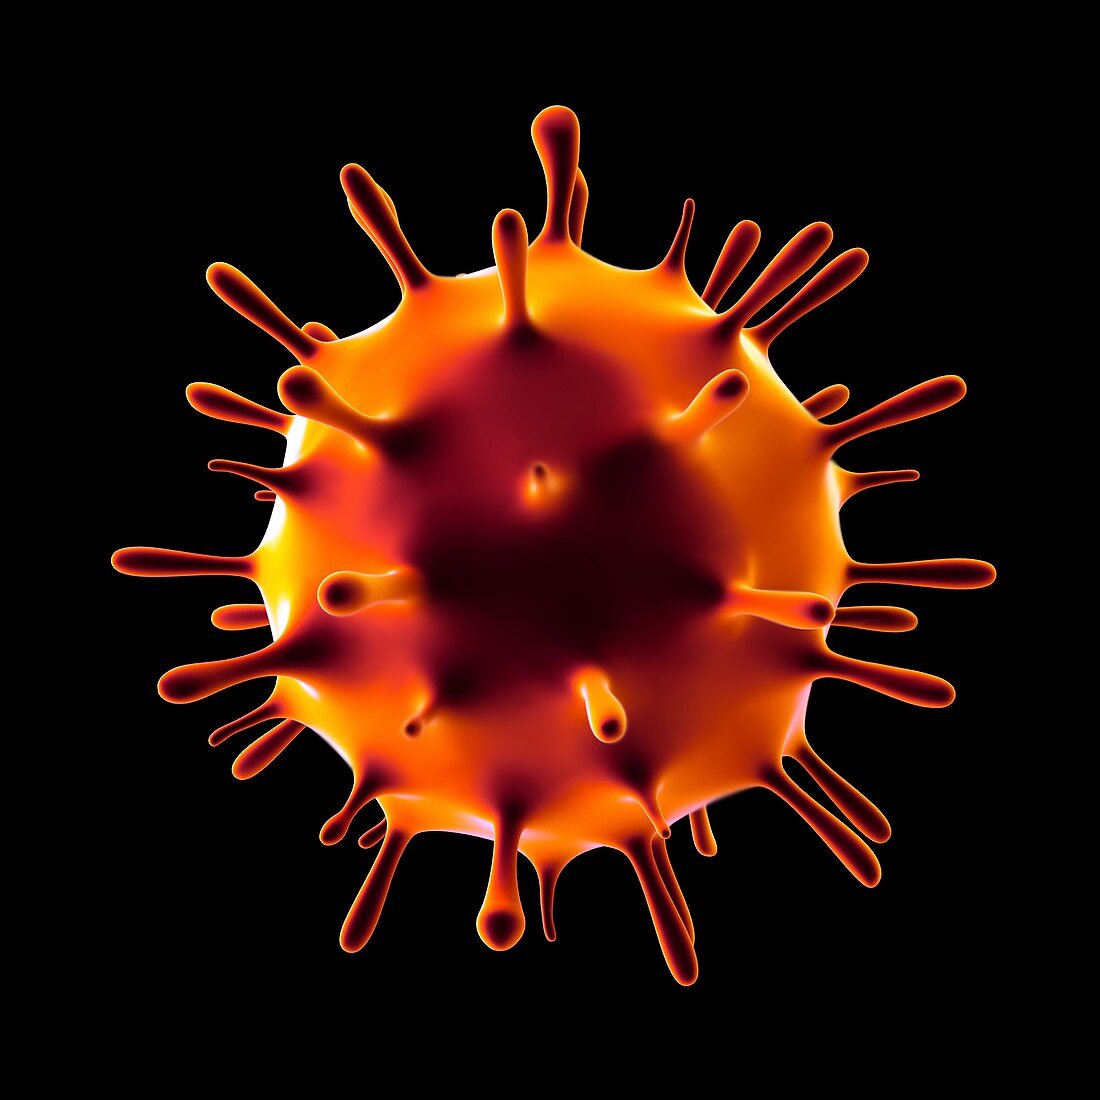 H1n1 flu virus,artwork